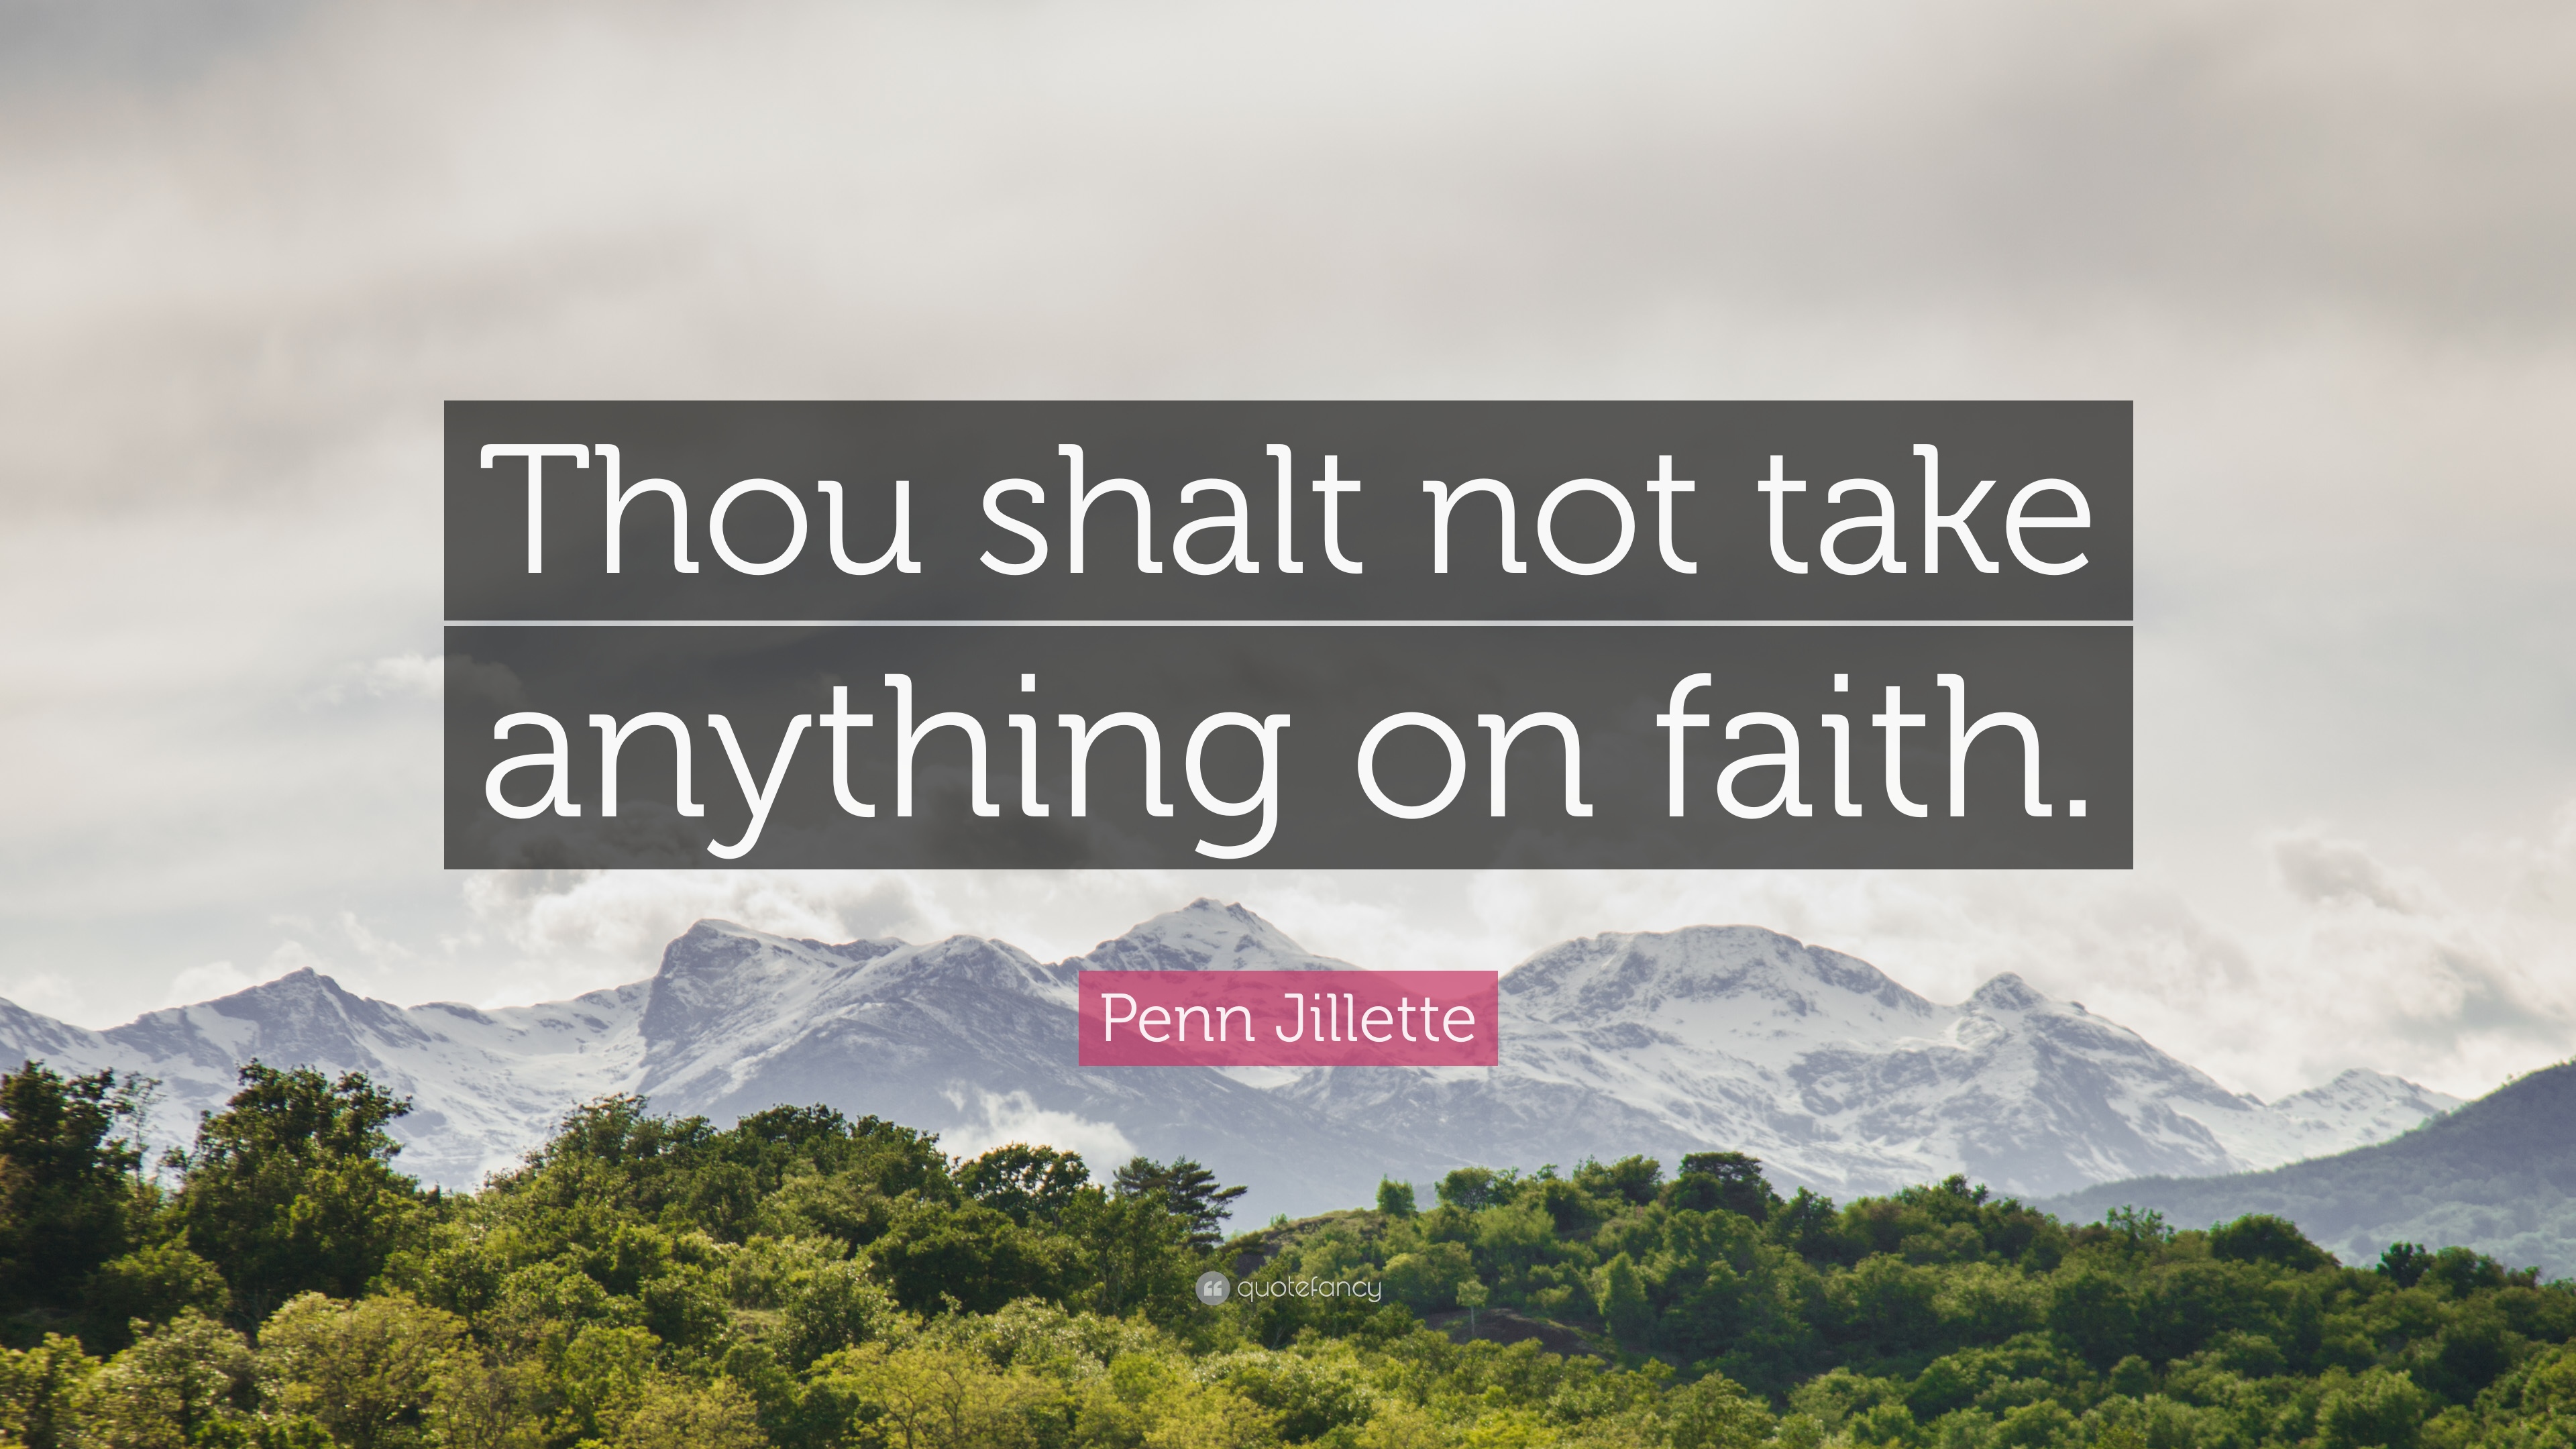 Penn Jillette Quote: “Thou shalt not take anything on faith.” 7